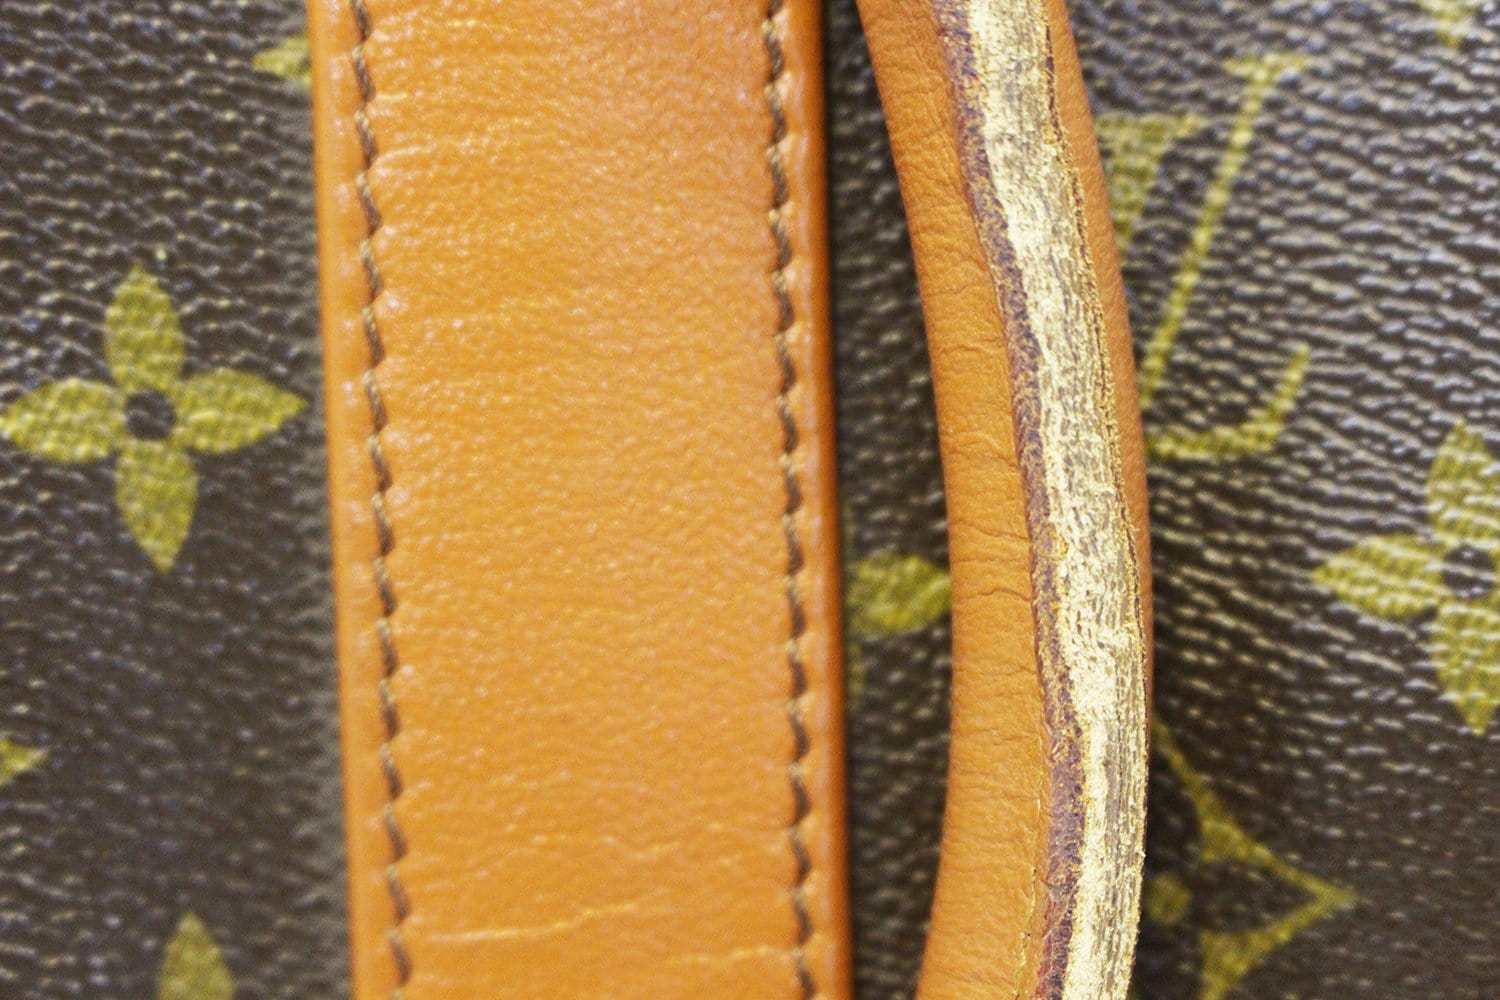 Louis Vuitton Monogram Sac Weekend PM Zip Tote Bag 863360